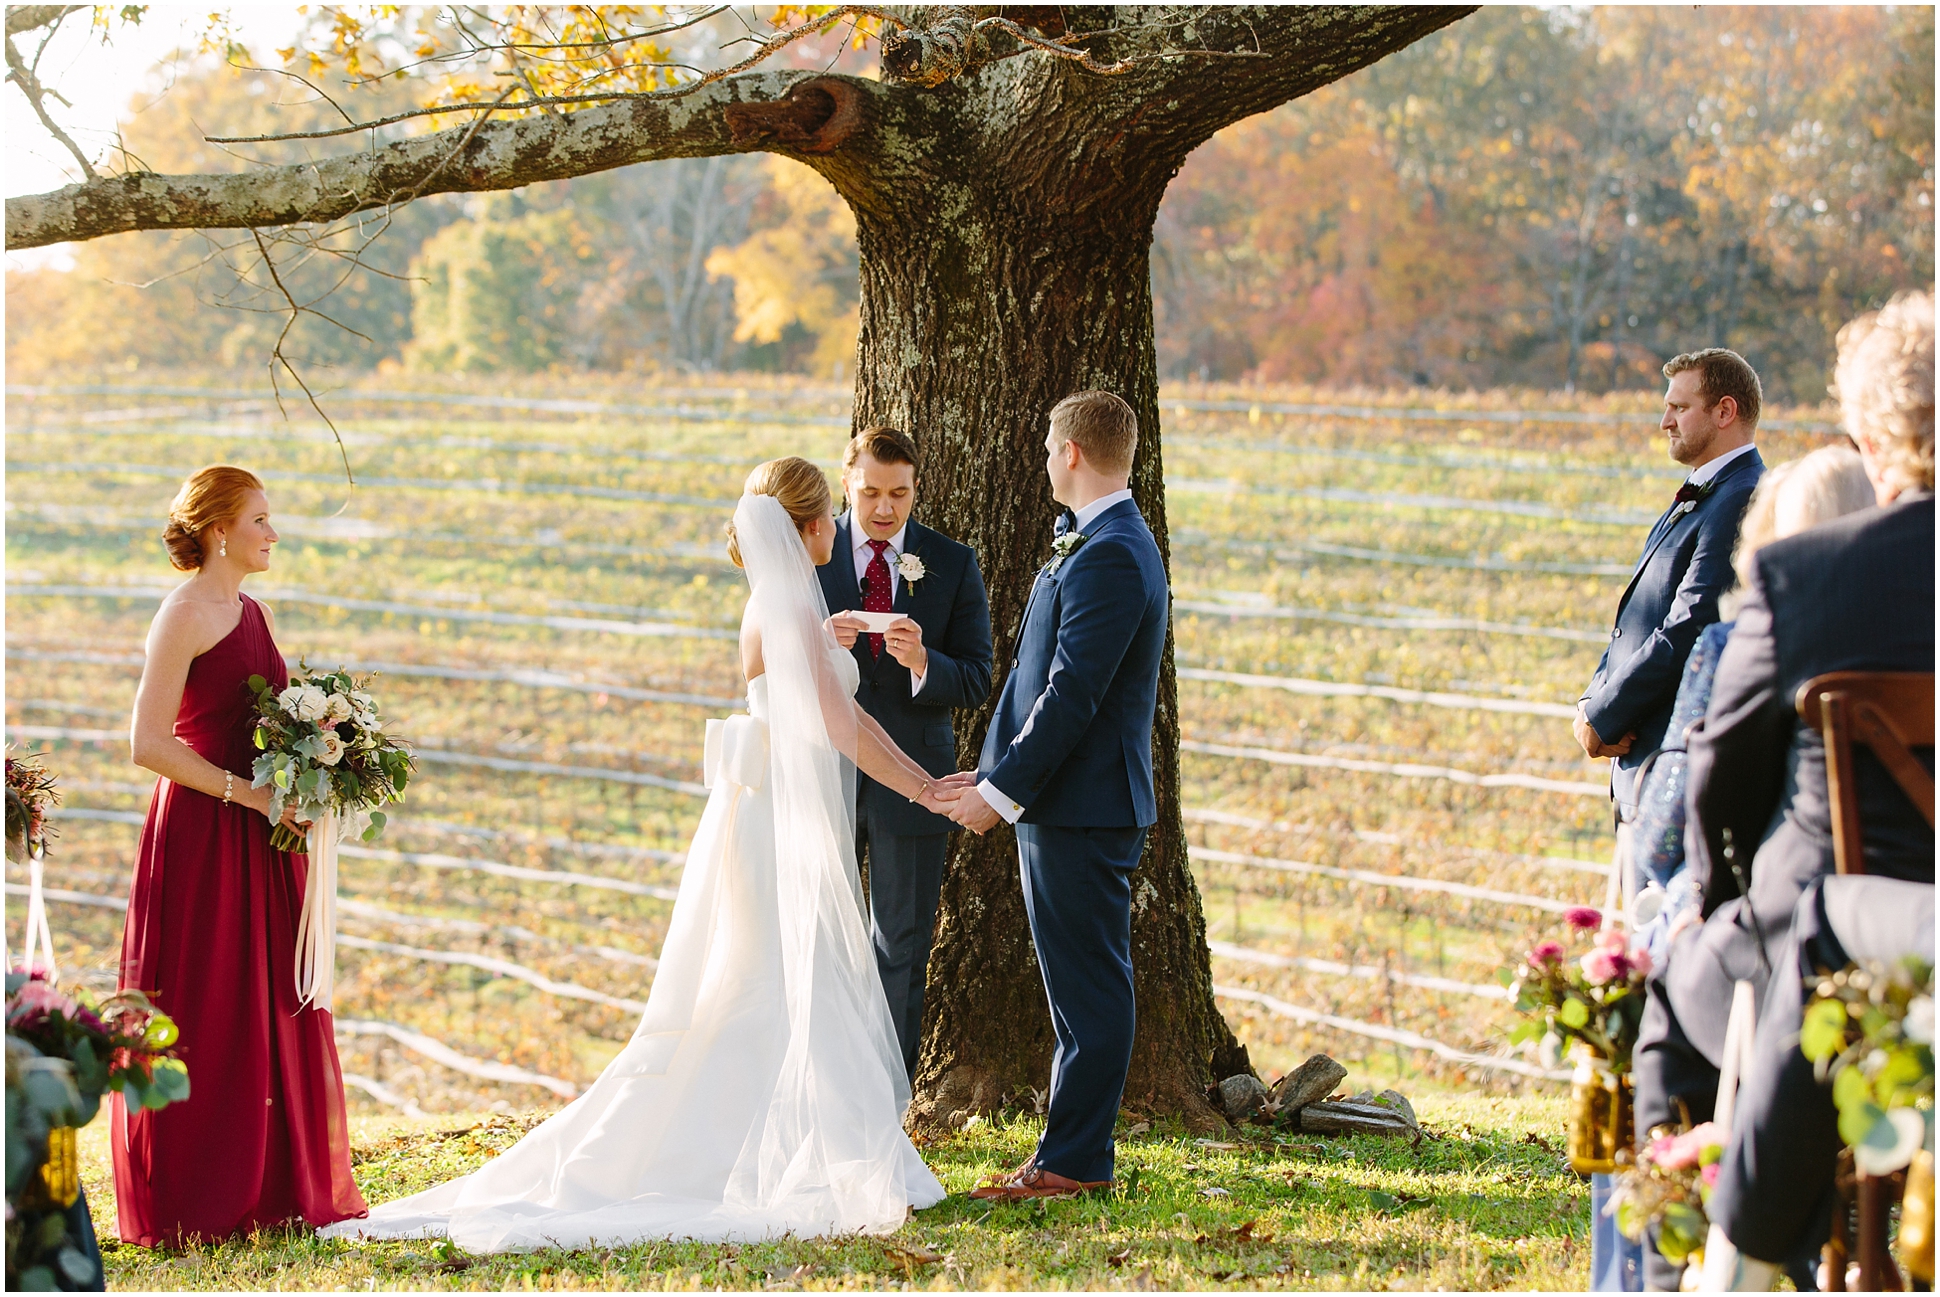 A Romantic Fall Winery Wedding at Monteluce Winery and Vineyards | Monteluce Winery | Dahlonega, Georgia Wedding Photographers | Two Chics Photography | www.twochicsphotography.com